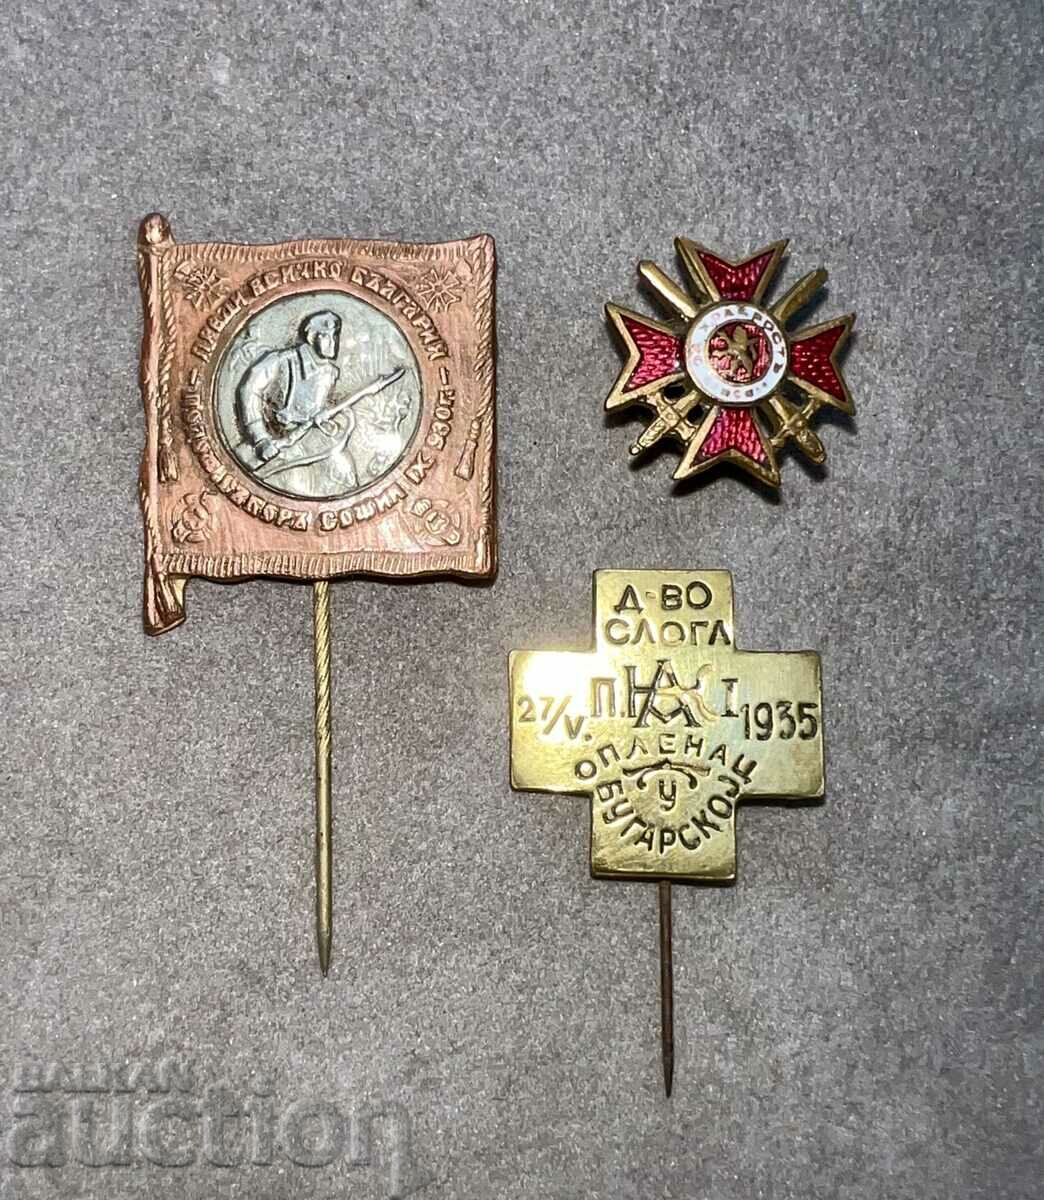 Rare royal badges Council, For bravery, Dvo Sloga 1935